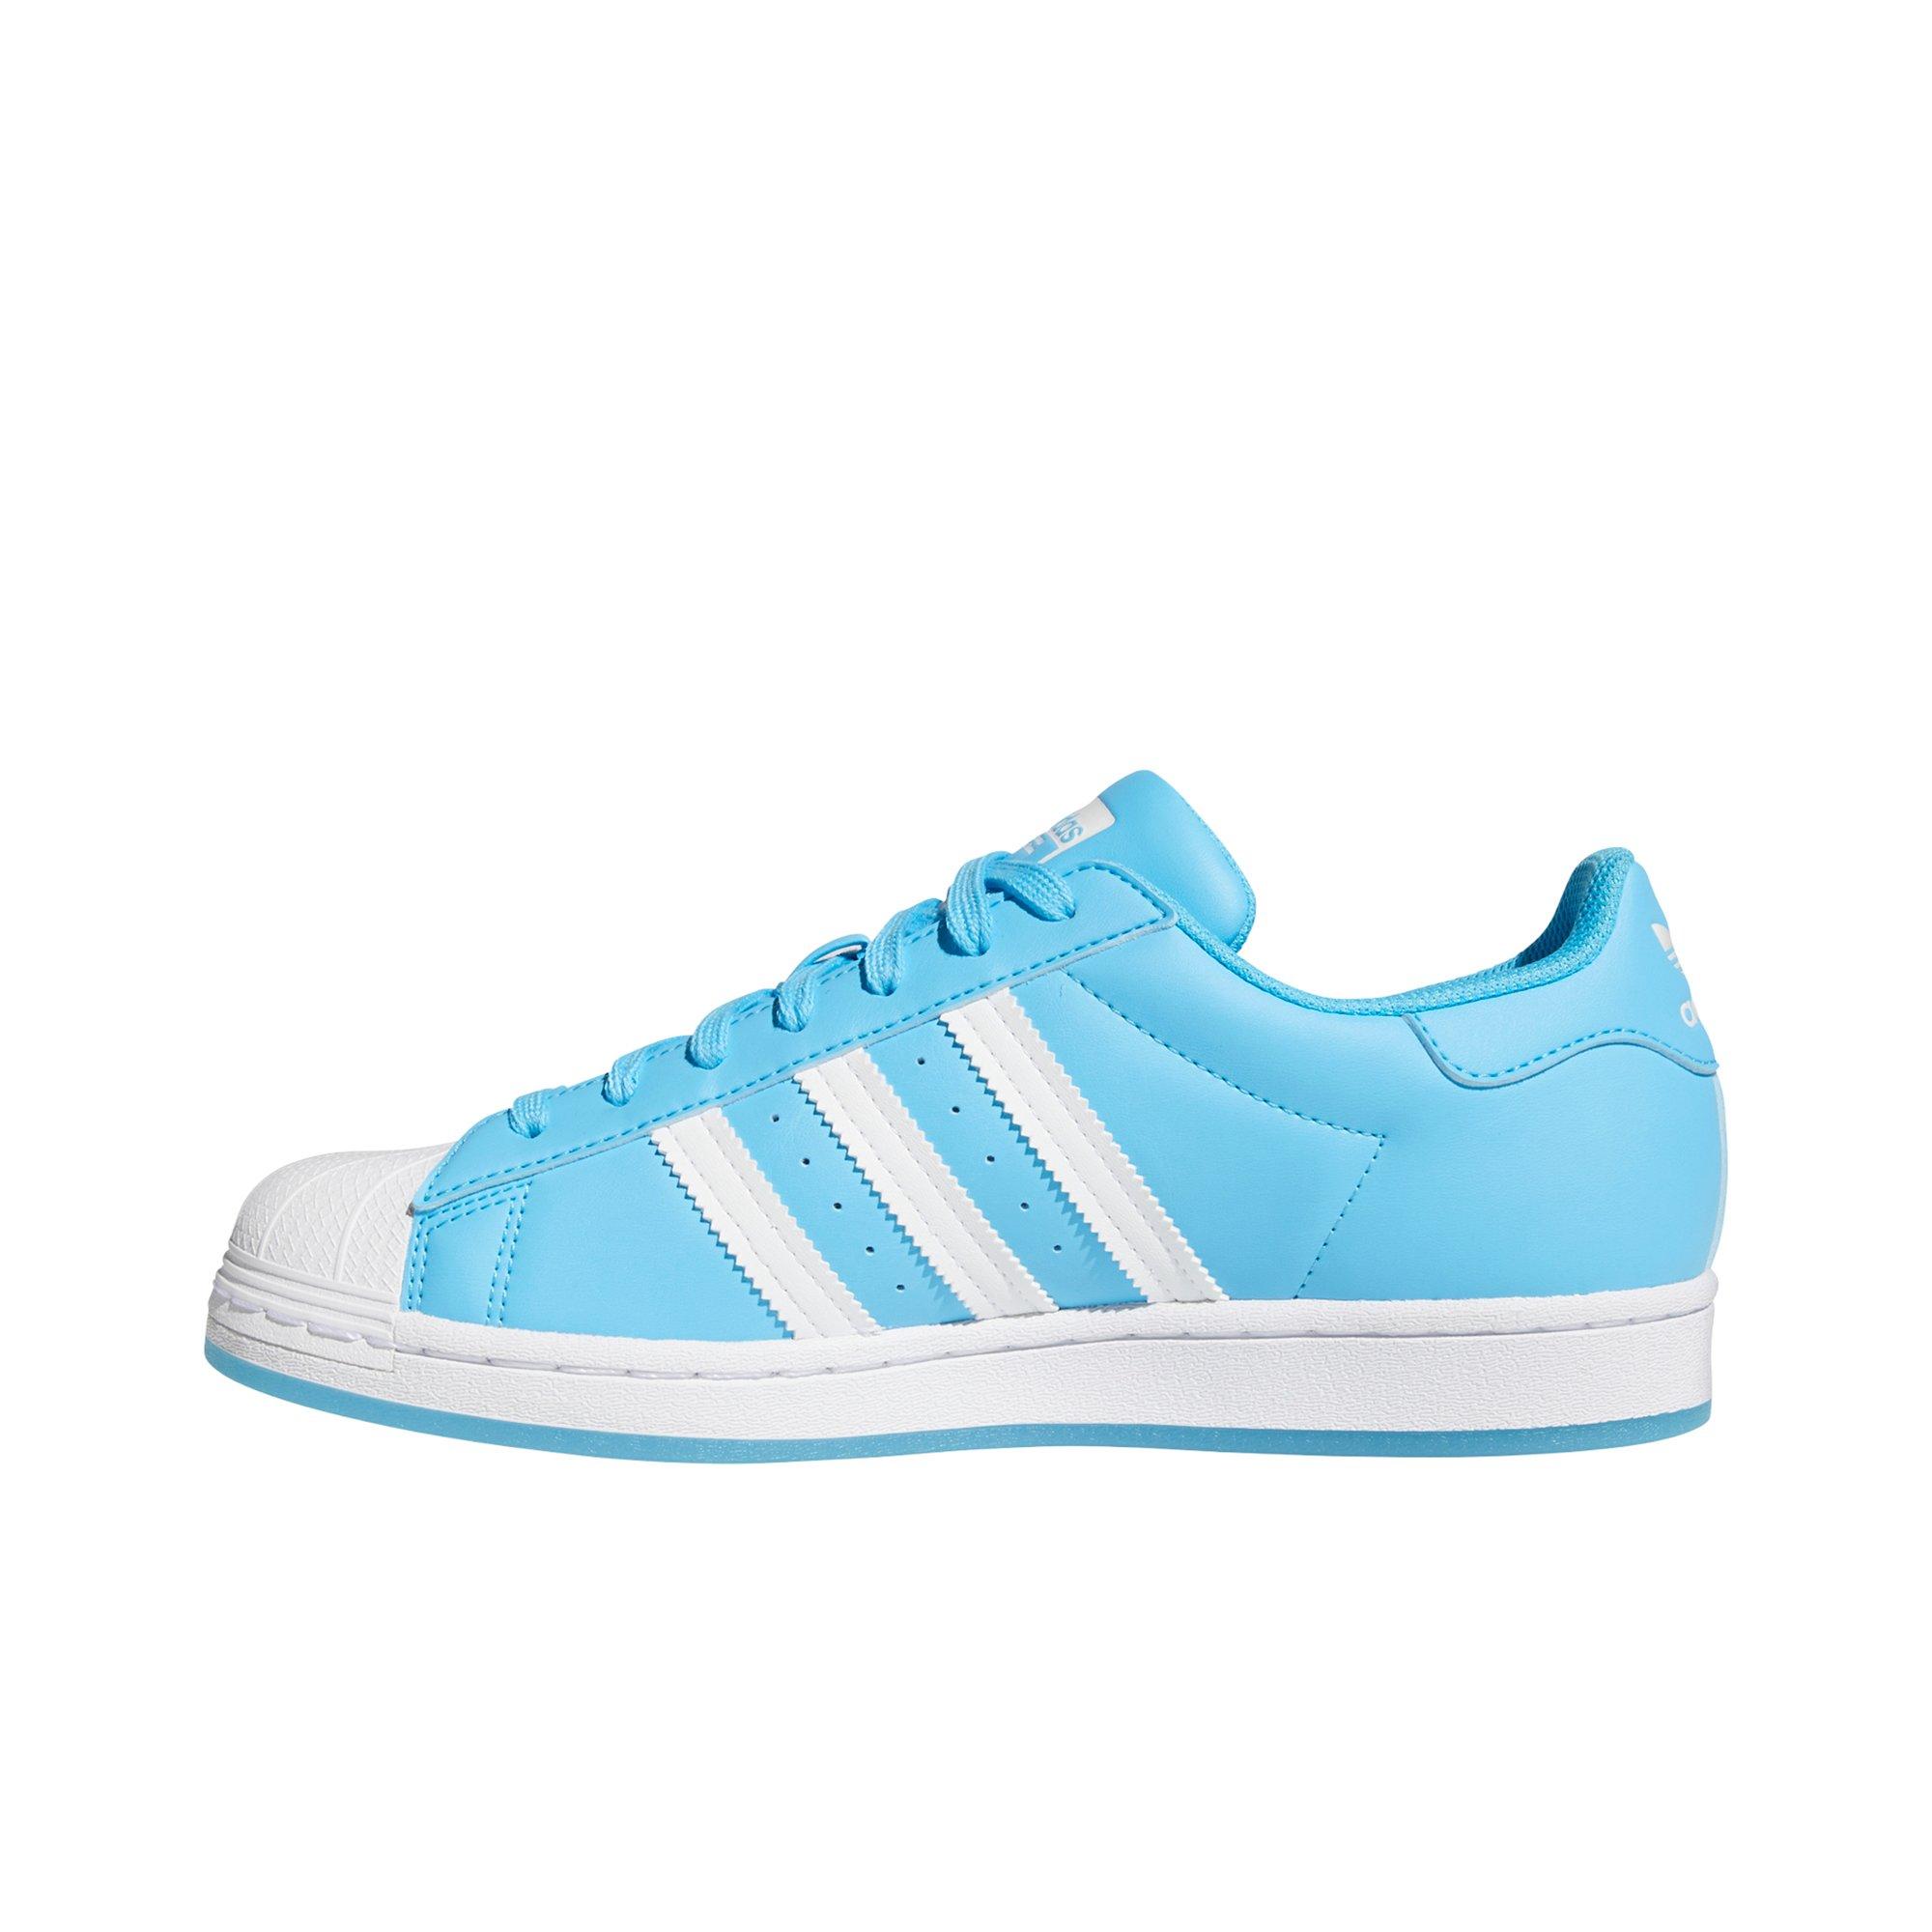 Mens Adidas Superstar Shelltoe sz 13 White green blue stripe